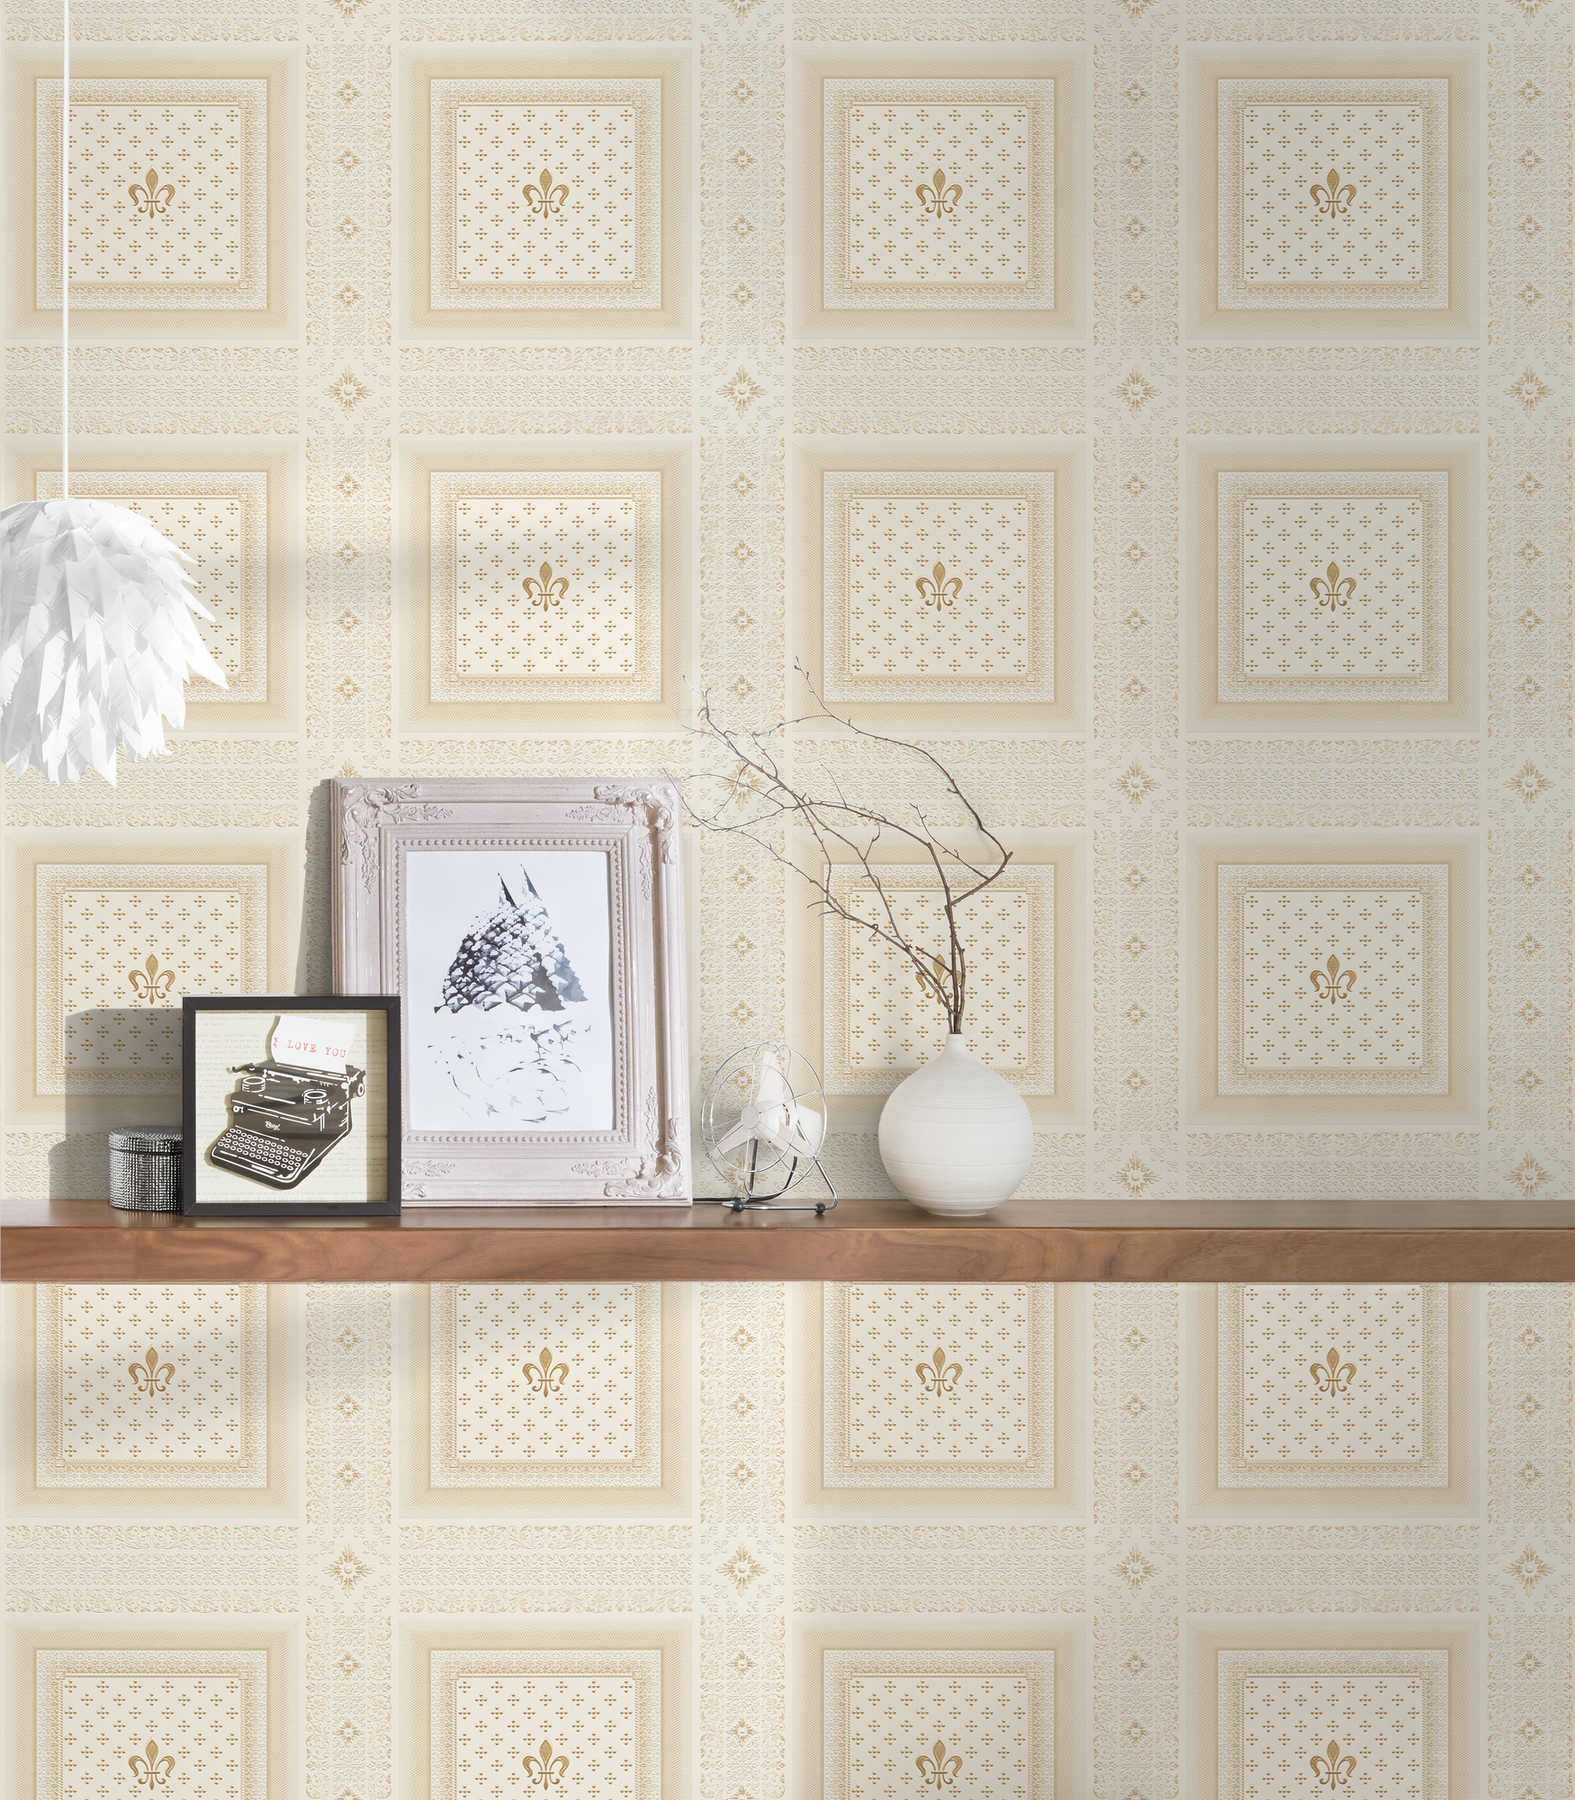             wallpaper Flour-de-lis design - beige, cream
        